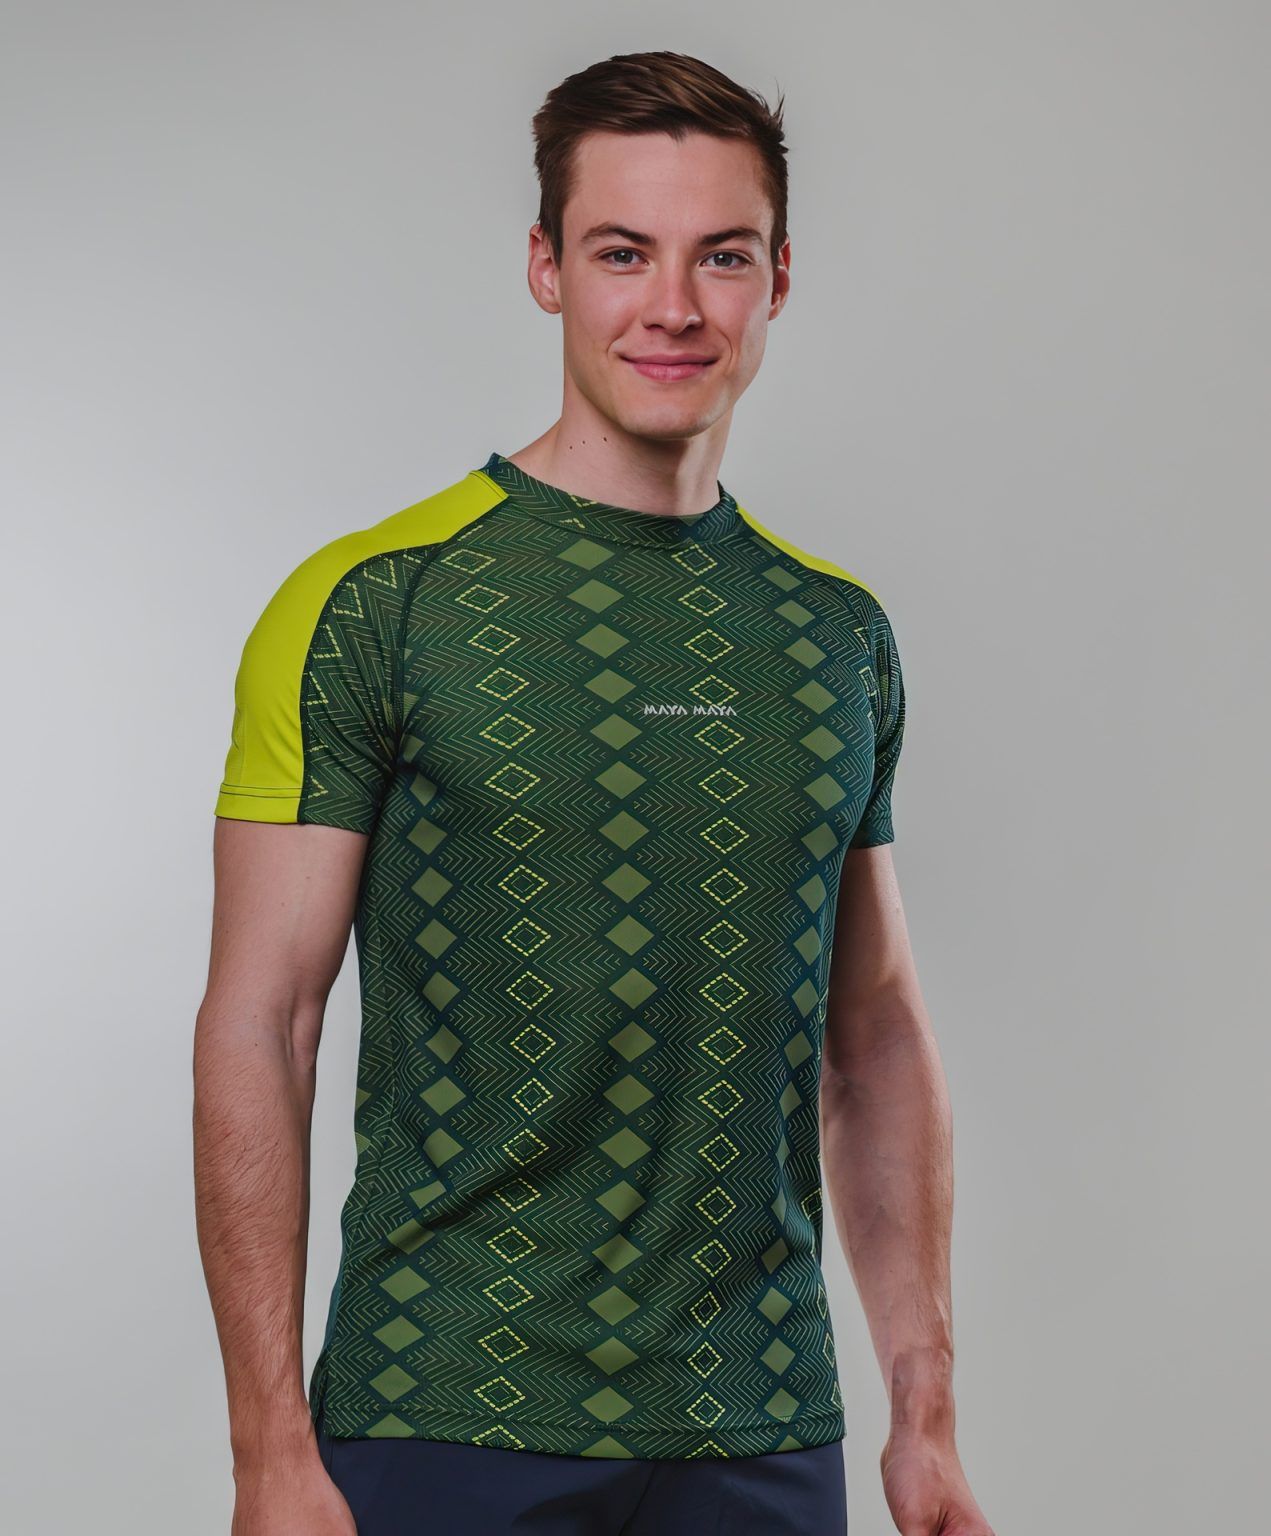 FastDrying Masawa shirt green for men from MAYA MAYA for running and outdoor activities